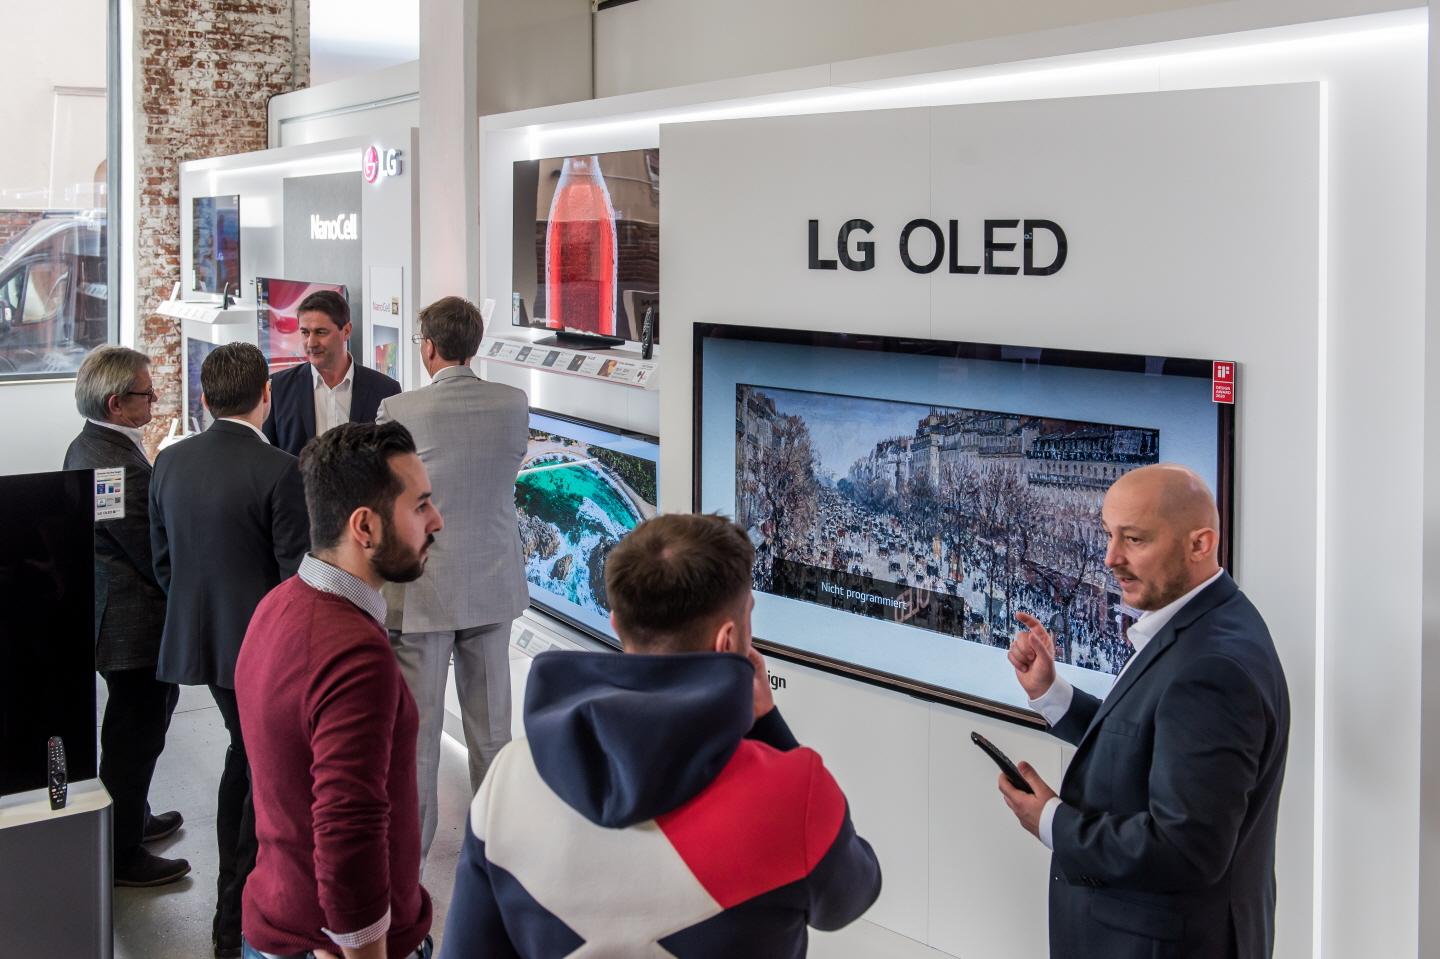 LG 올레드 TV가 유력 매체들로부터 연이은 호평을 받고 있는 가운데, 최근에는 유럽 7개국 소비자매체가 실시한 성능평가에서 1위부터 4위까지를 전부 석권하며 우수성을 인정받았다. 사진은 유럽지역 거래선 관계자들이 2020년형 LG 올레드 TV를 살펴보는 장면.